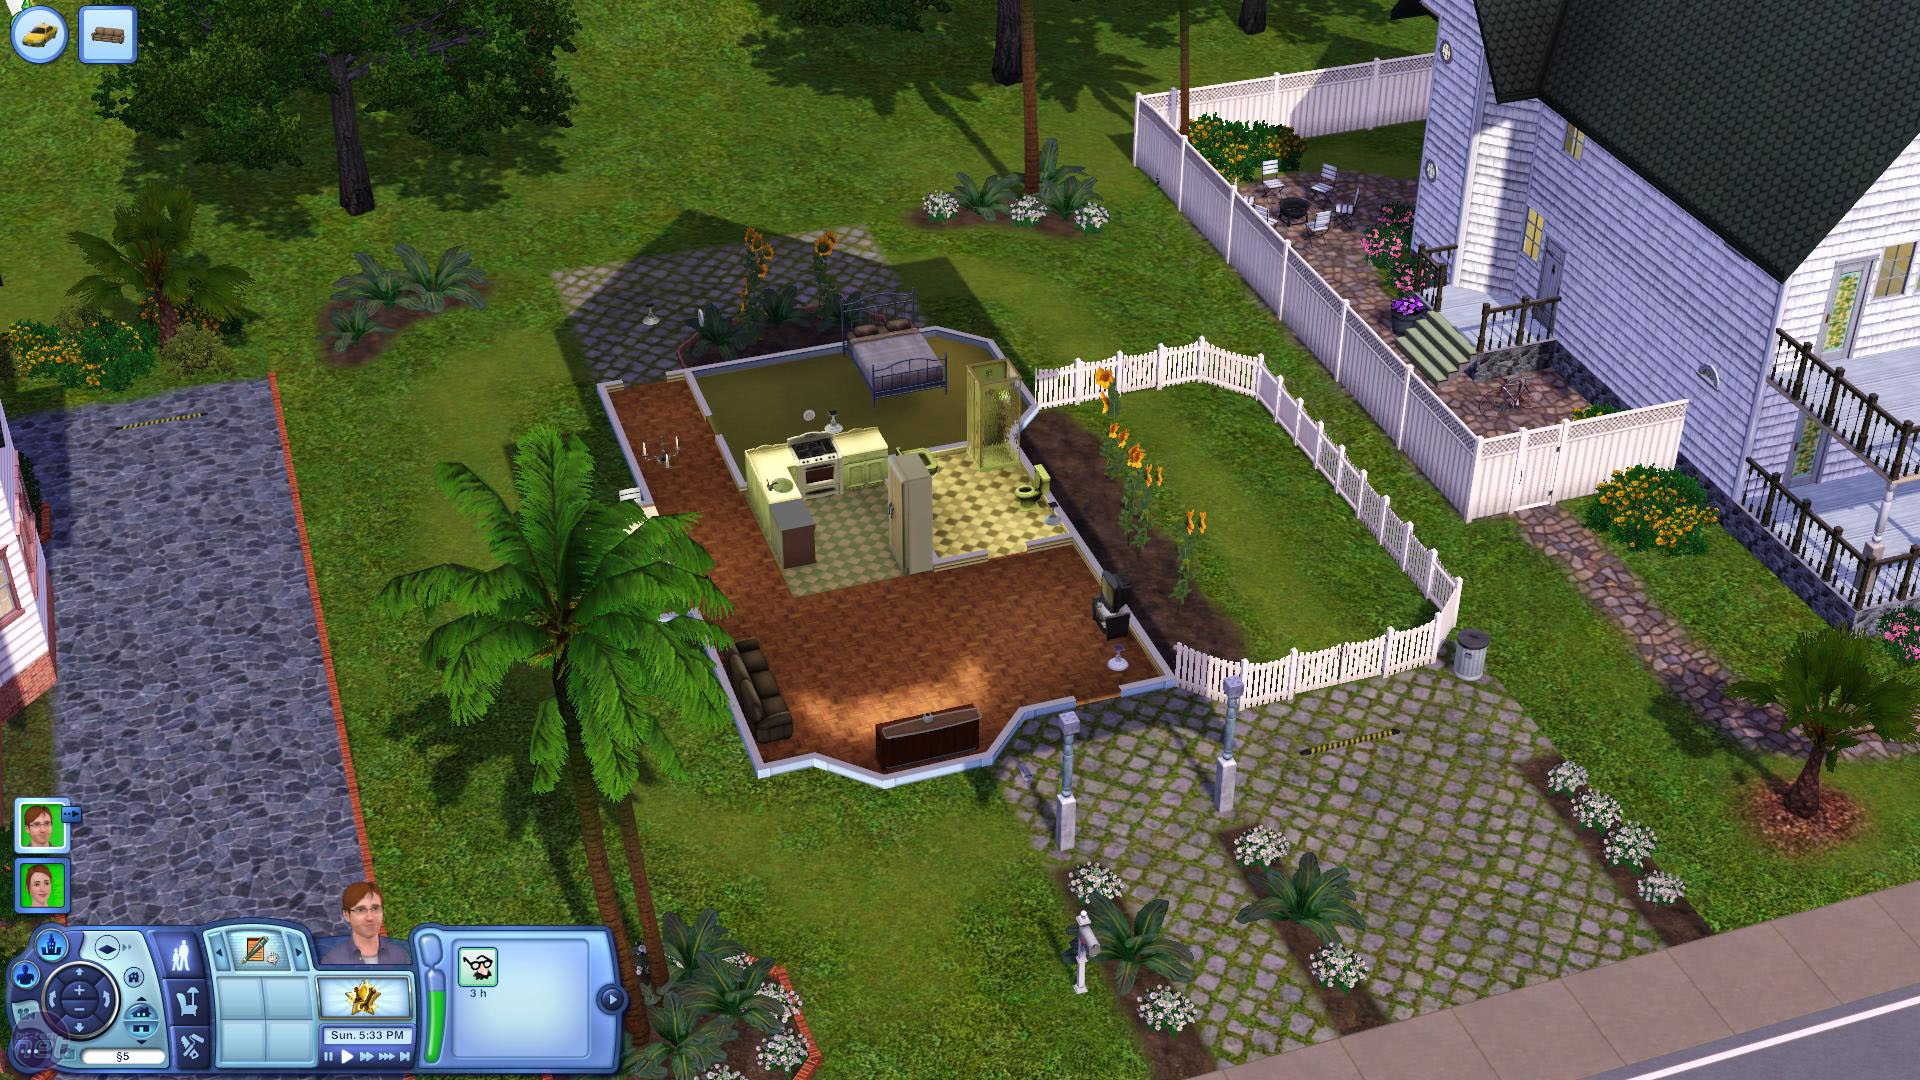 Sims 3 Downloads Free Pc